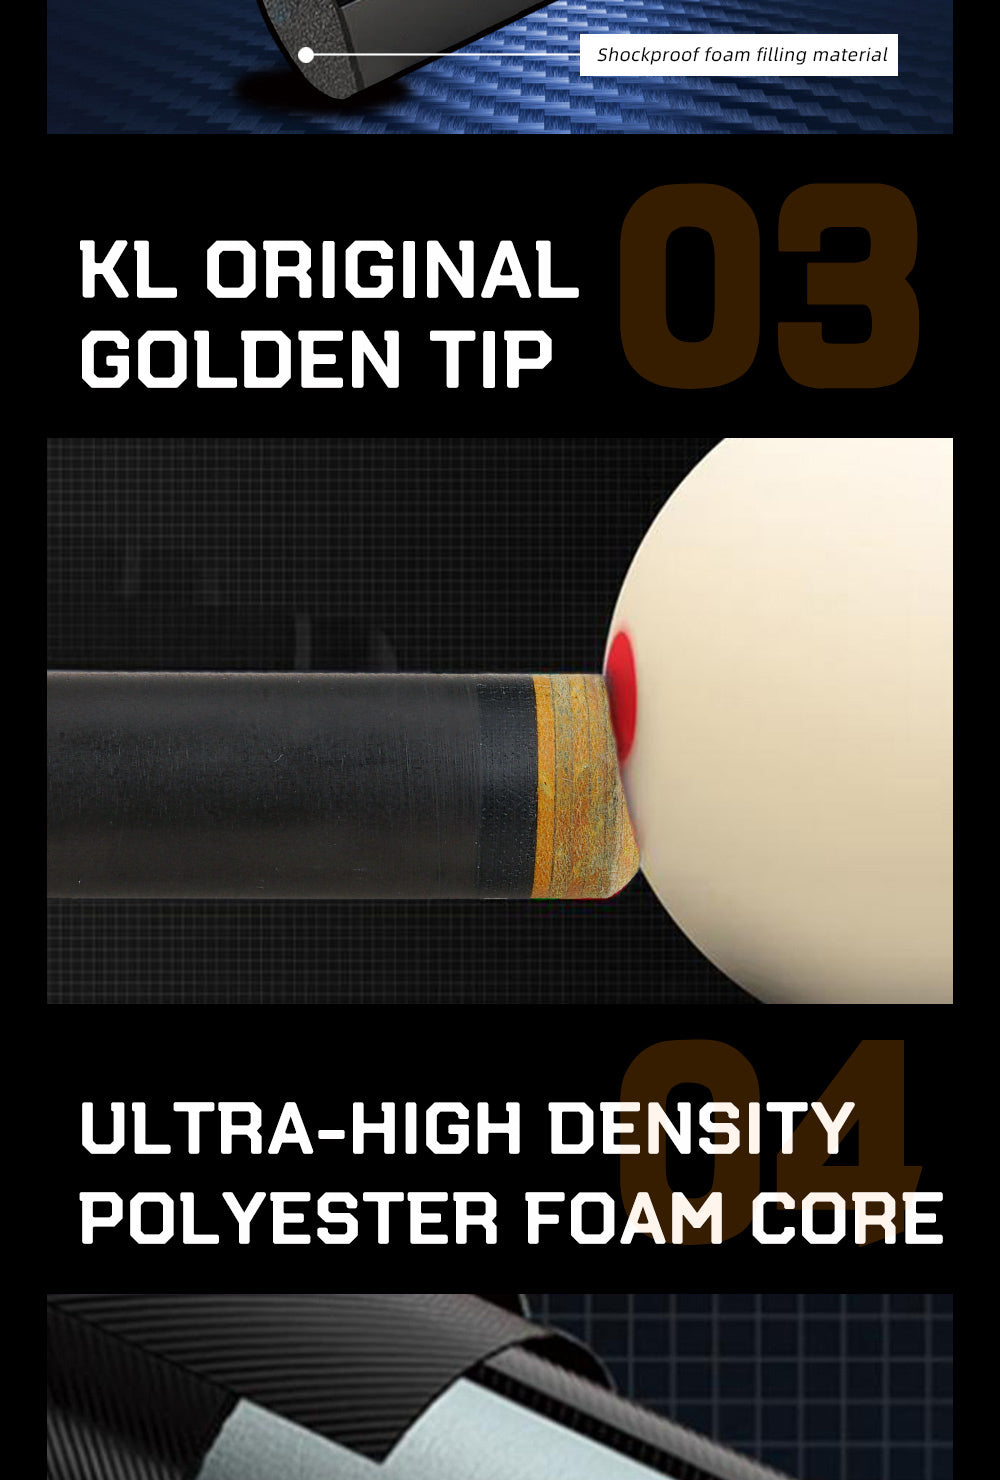 KONLLEN-Carbon Fiber Shaft for Billiard Pool Cue Stick, Uni-Loc Joint, Single Shaft, 10.5mm, 11.5mm,12.5mm